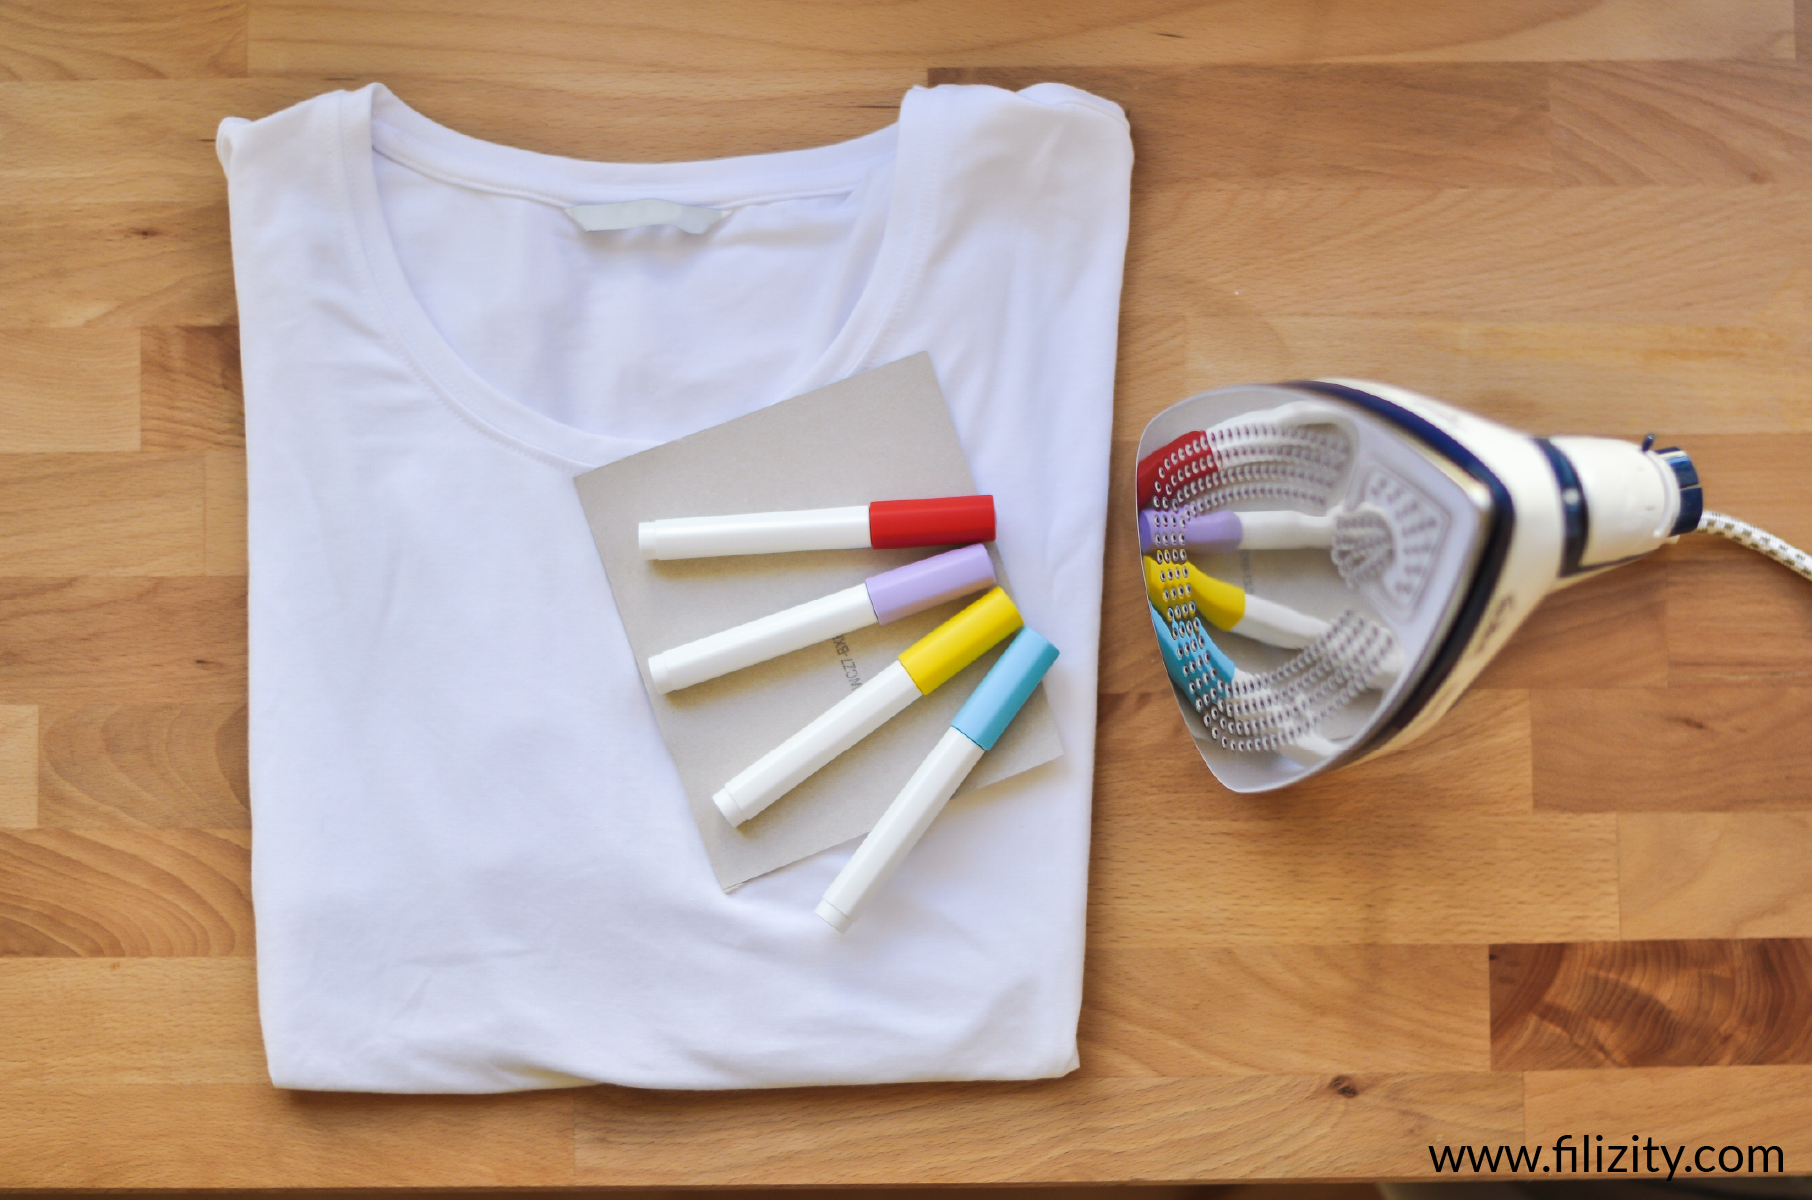 DIY Regenbogen: T-Shirt bemalen, Hoffnung schenken | Filizity.com - Kreativmagazin & DIY Blog #corona #regenbogen #wirbleibenzuhause #upcycling